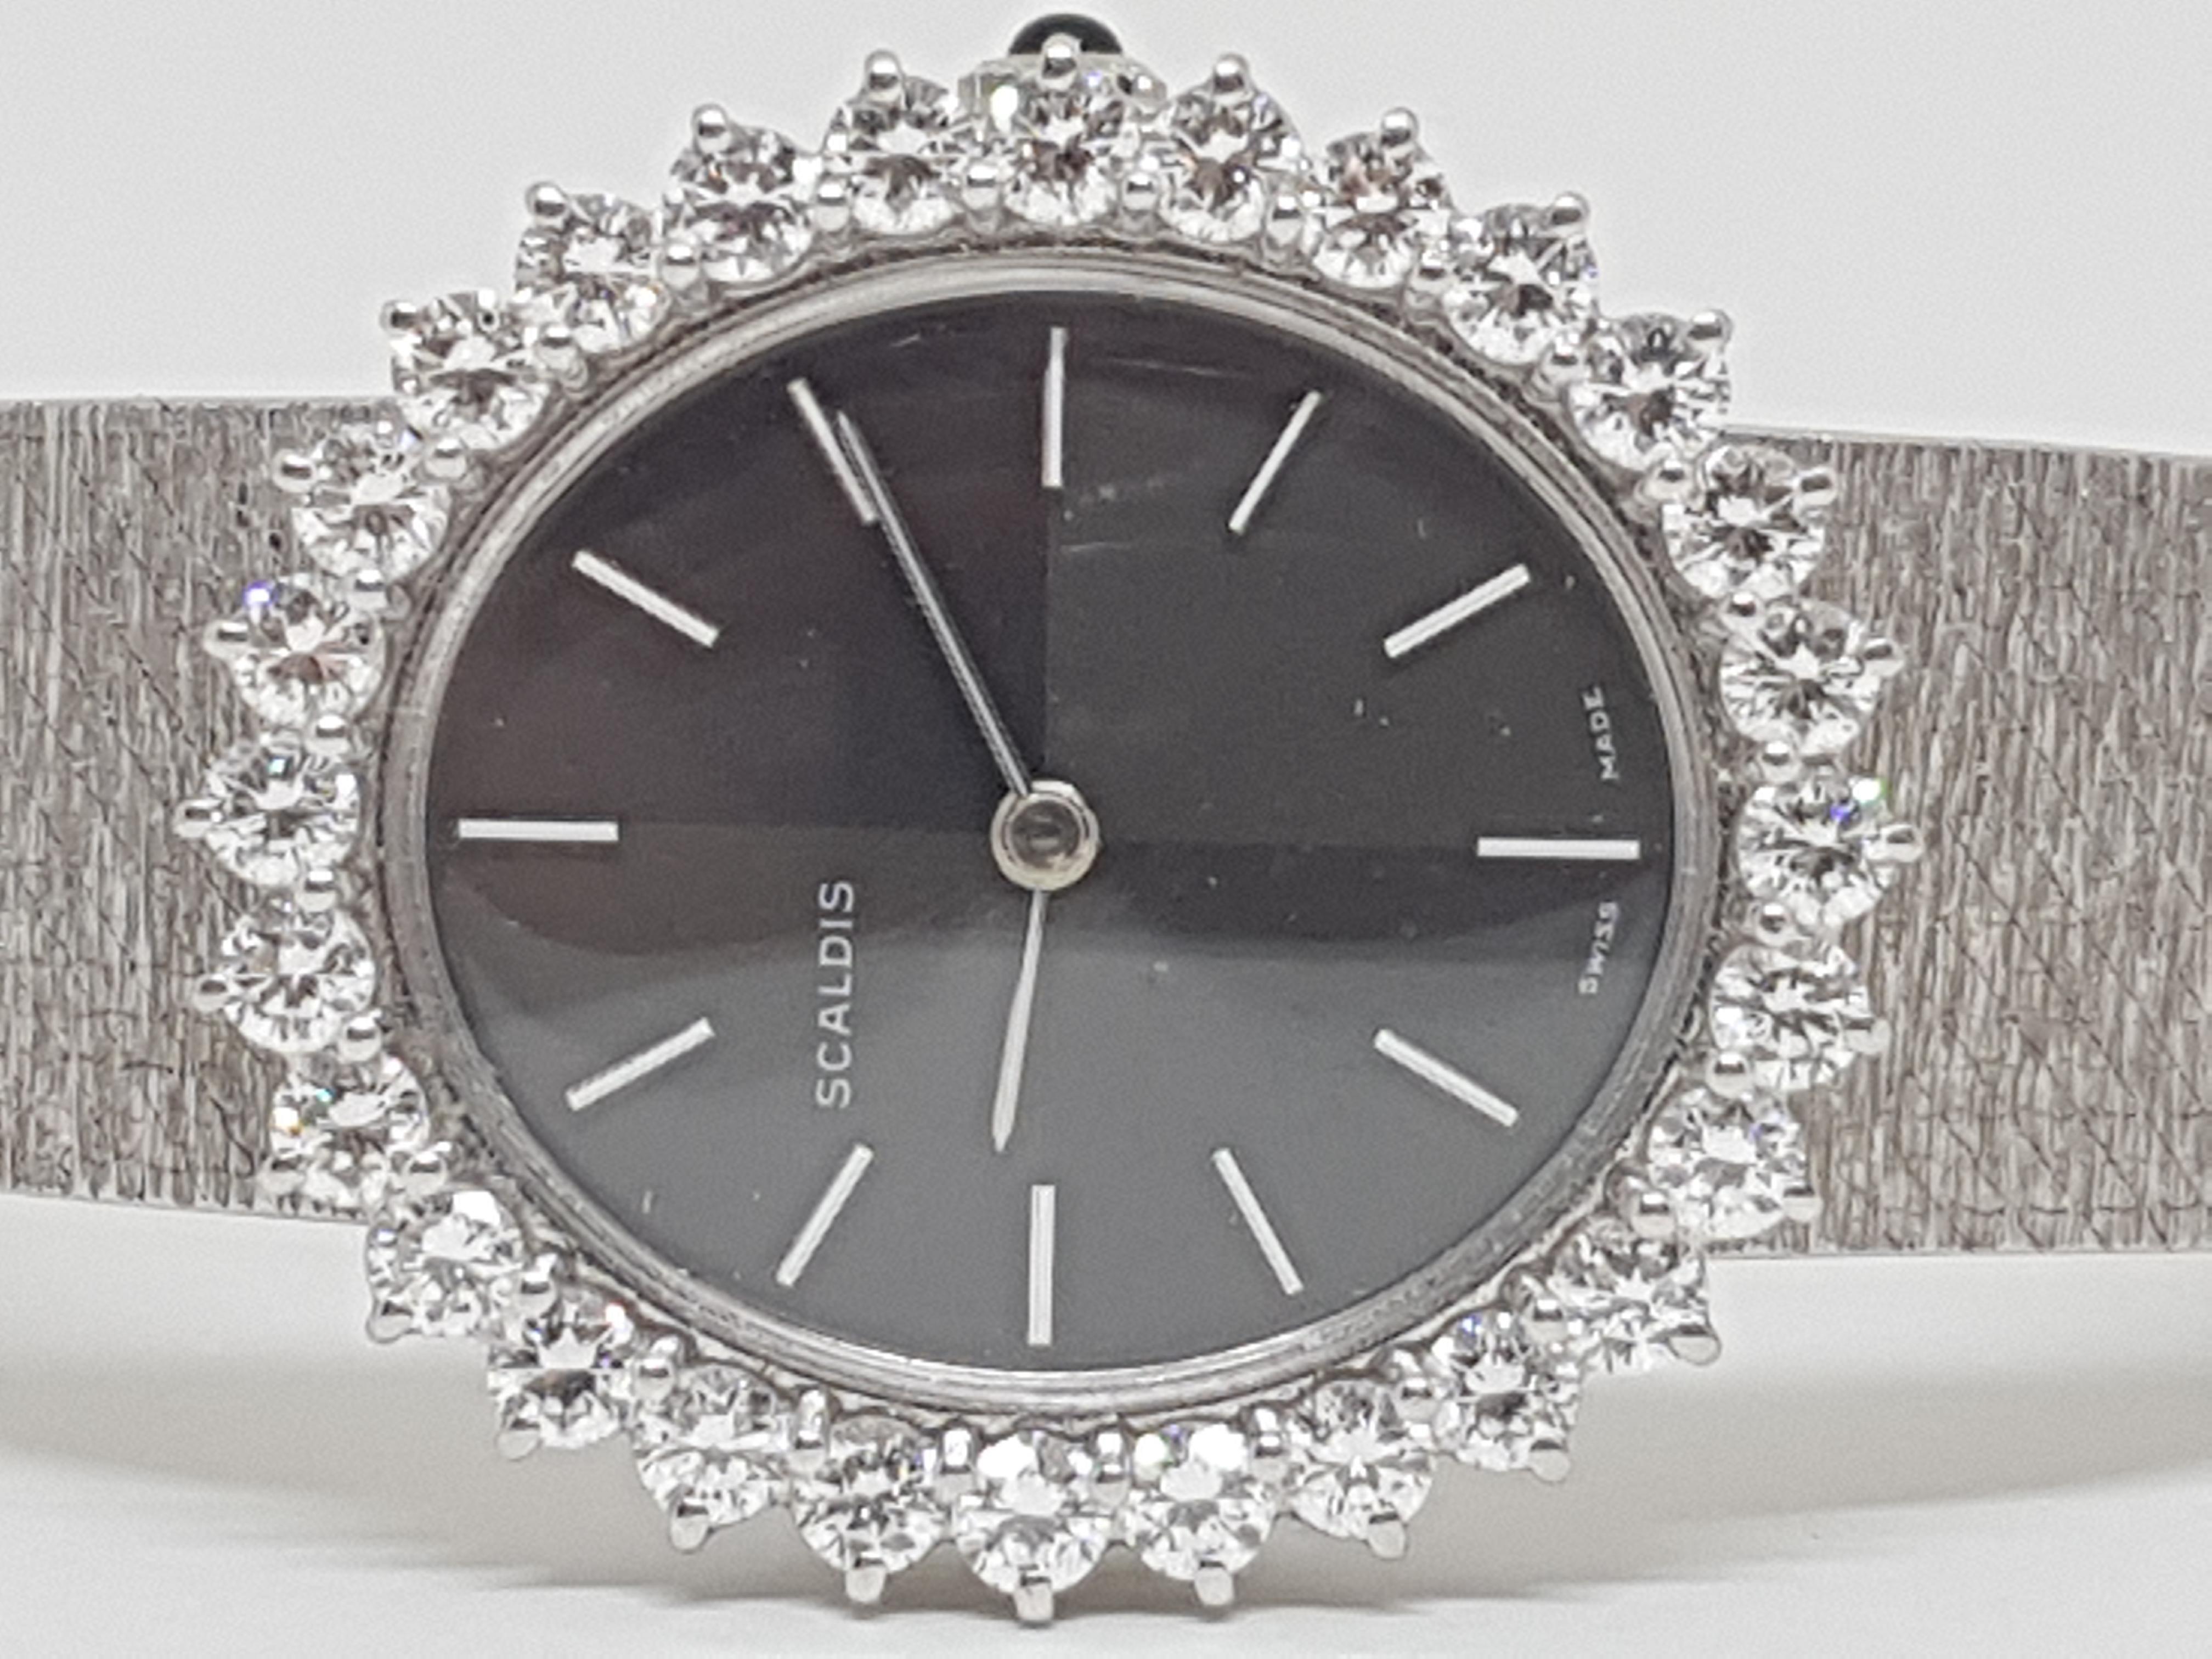 Scaldis 18 Karat White Gold Diamonds Vintage Ladies Watch 1